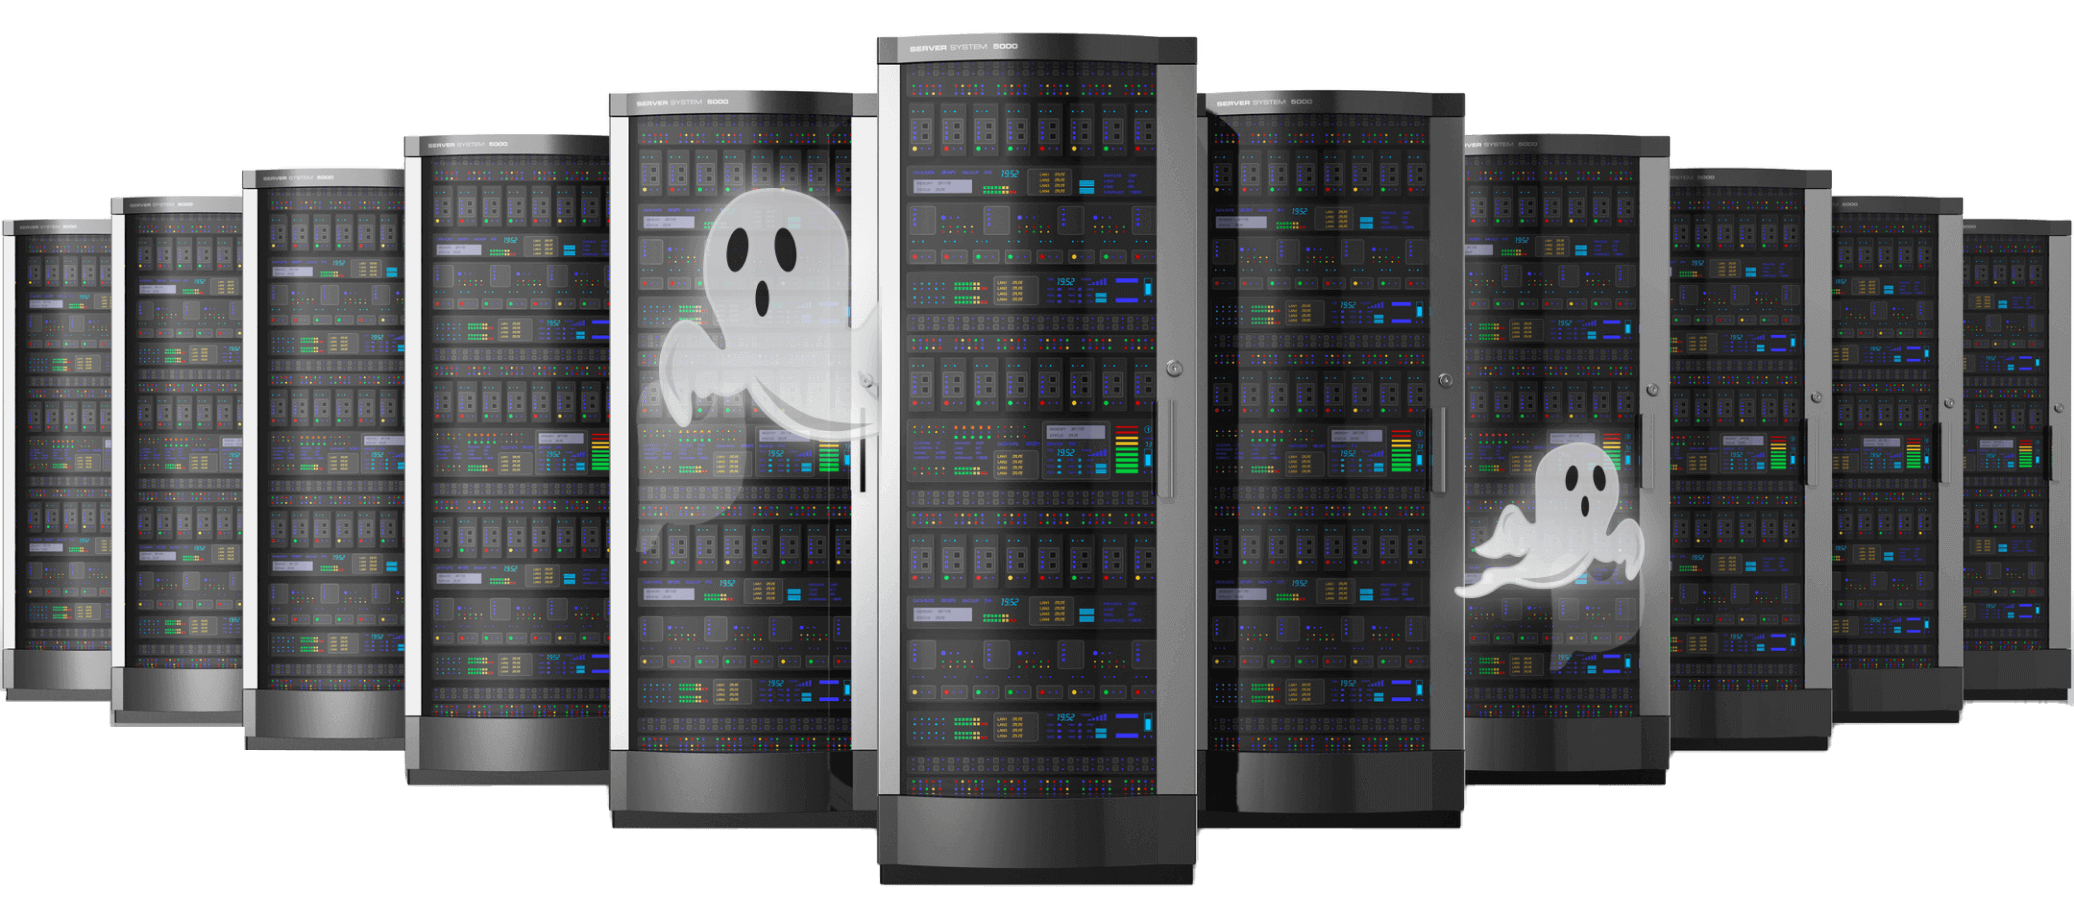 Ghost servers